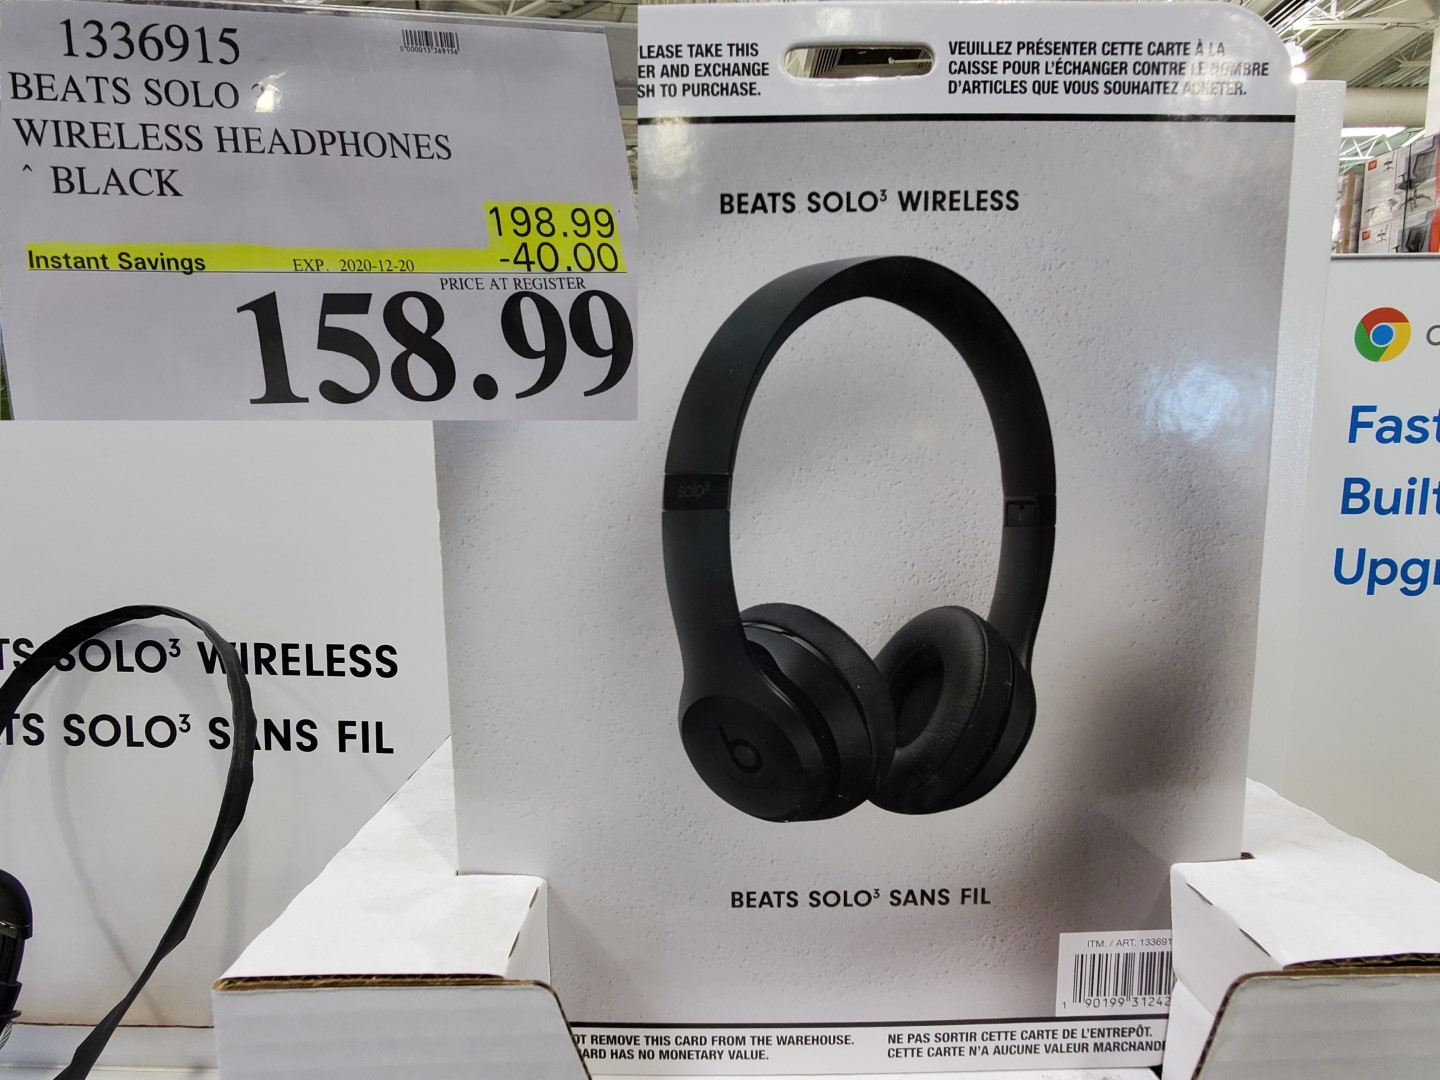 Beats Solo wireless headphones